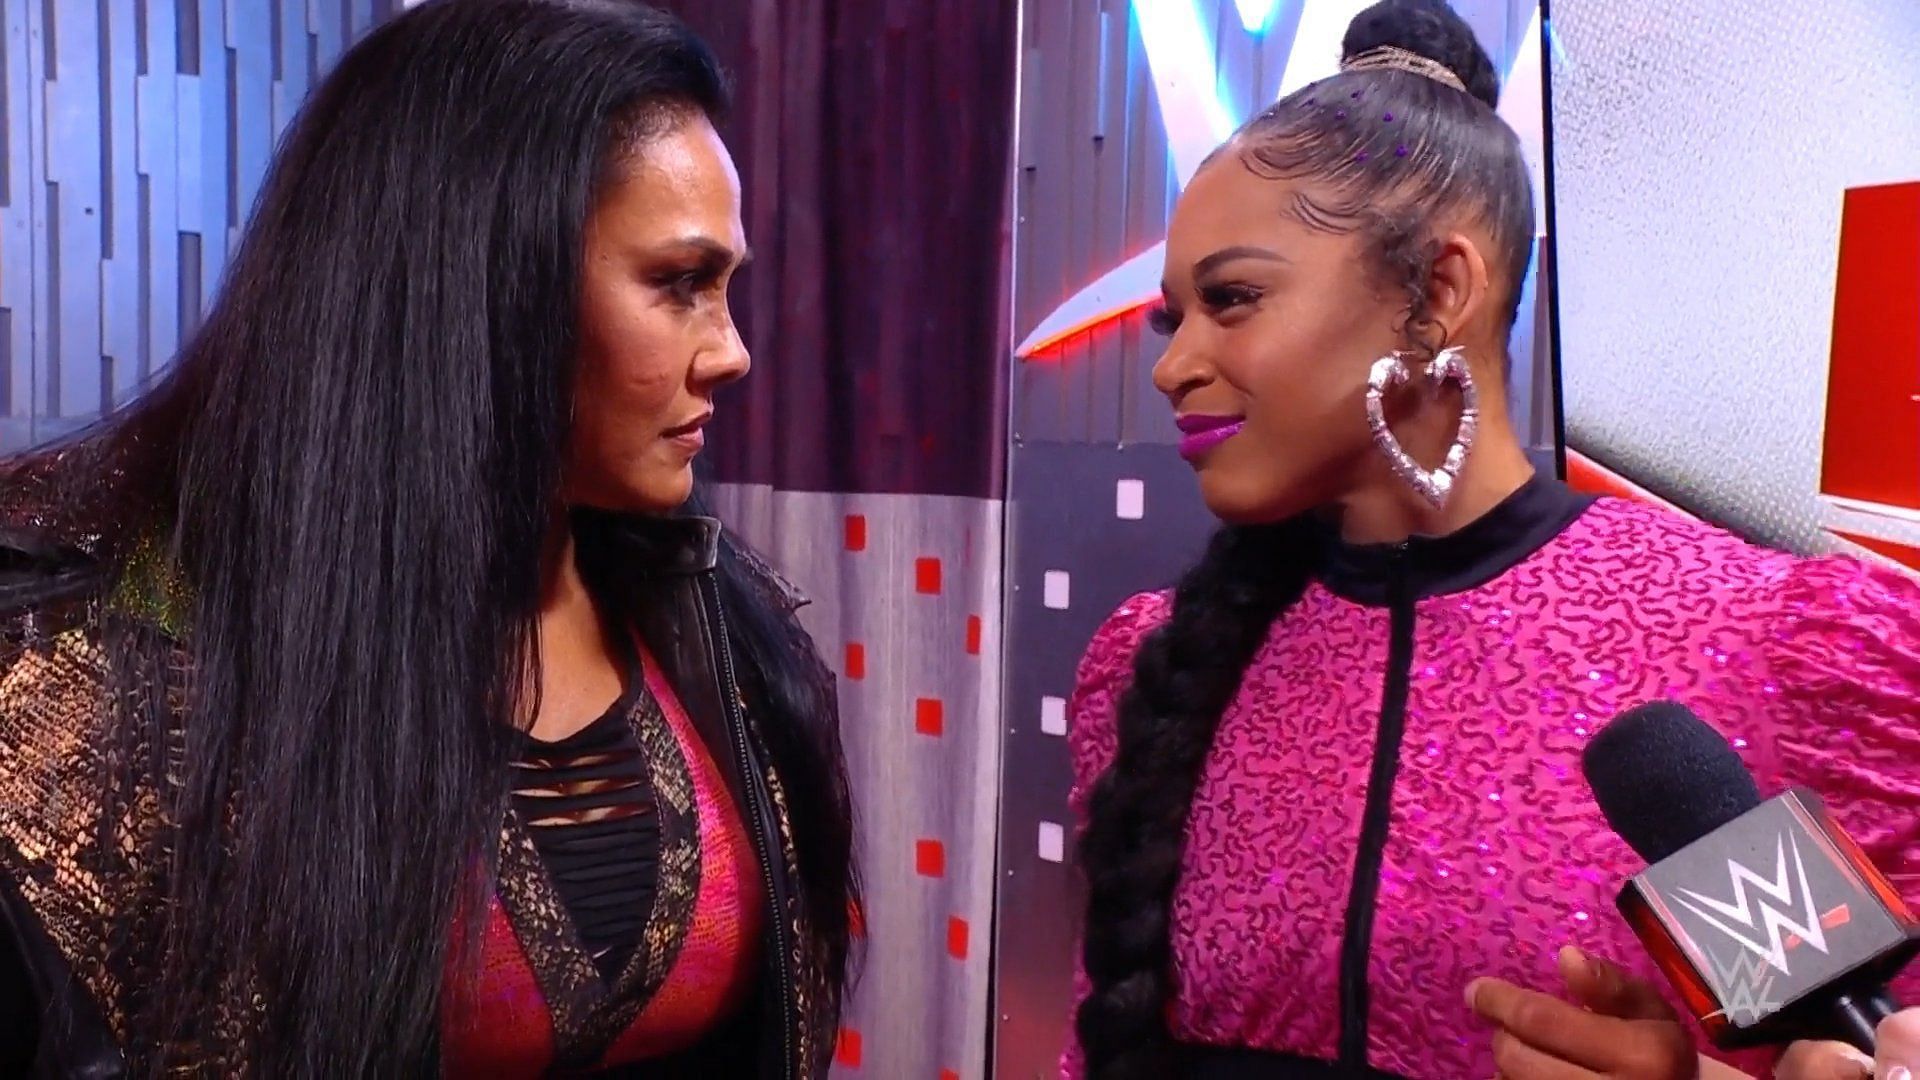 Tamina Snuka and Bianca Belair during their backstage segment on RAW.